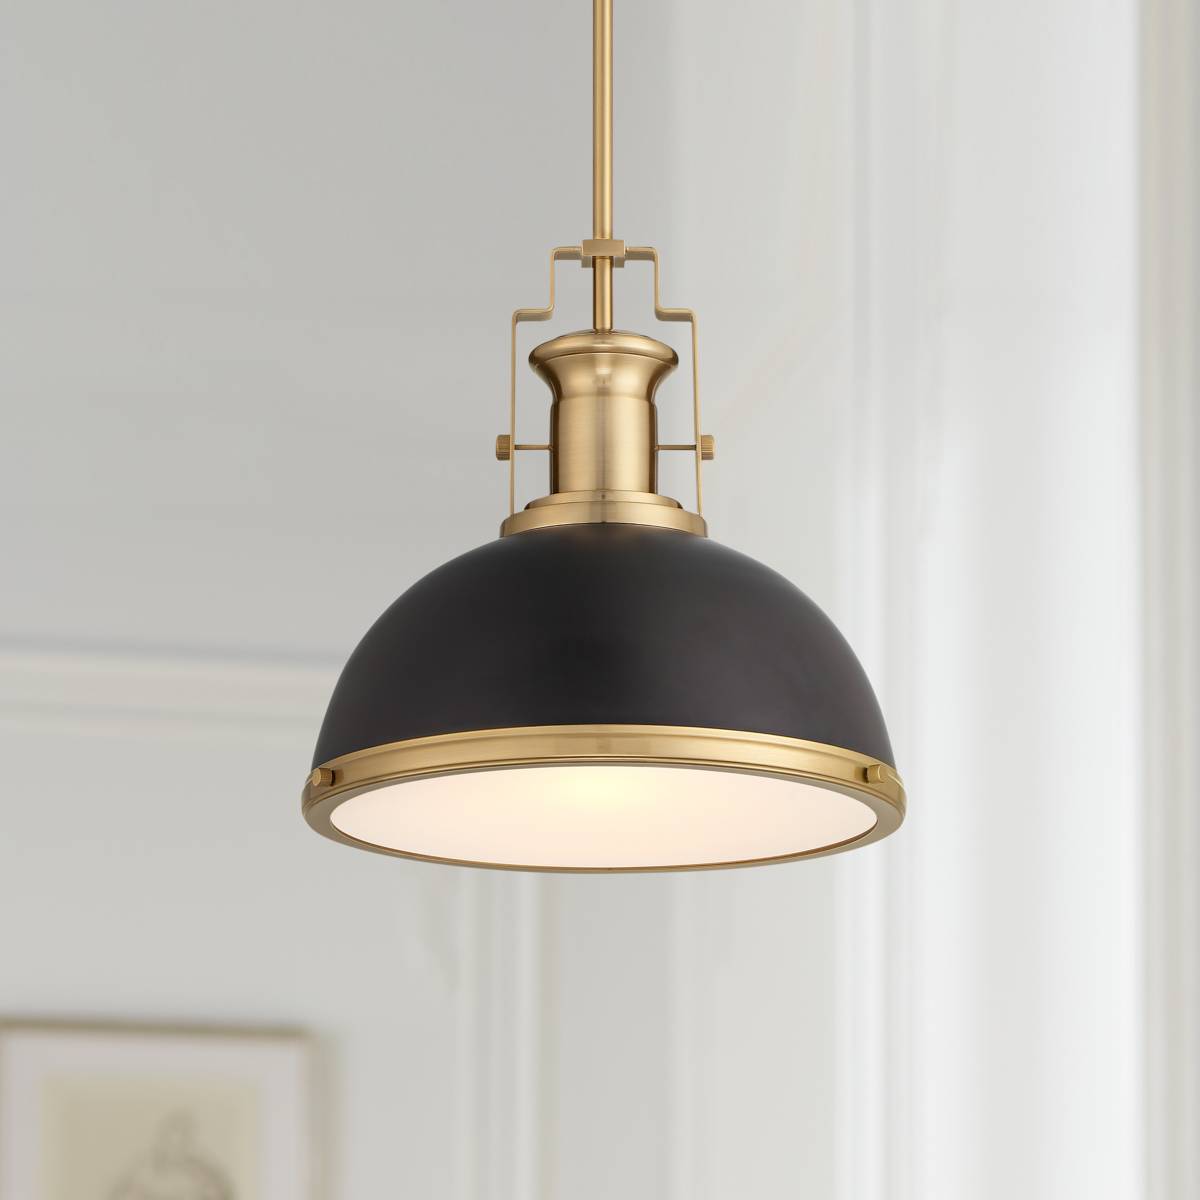 https://image.lampsplus.com/is/image/b9gt8/possini-euro-design-posey-13-wide-black-and-gold-dome-pendant-light__523v1cropped.jpg?qlt=70&wid=1200&hei=1200&fmt=jpeg